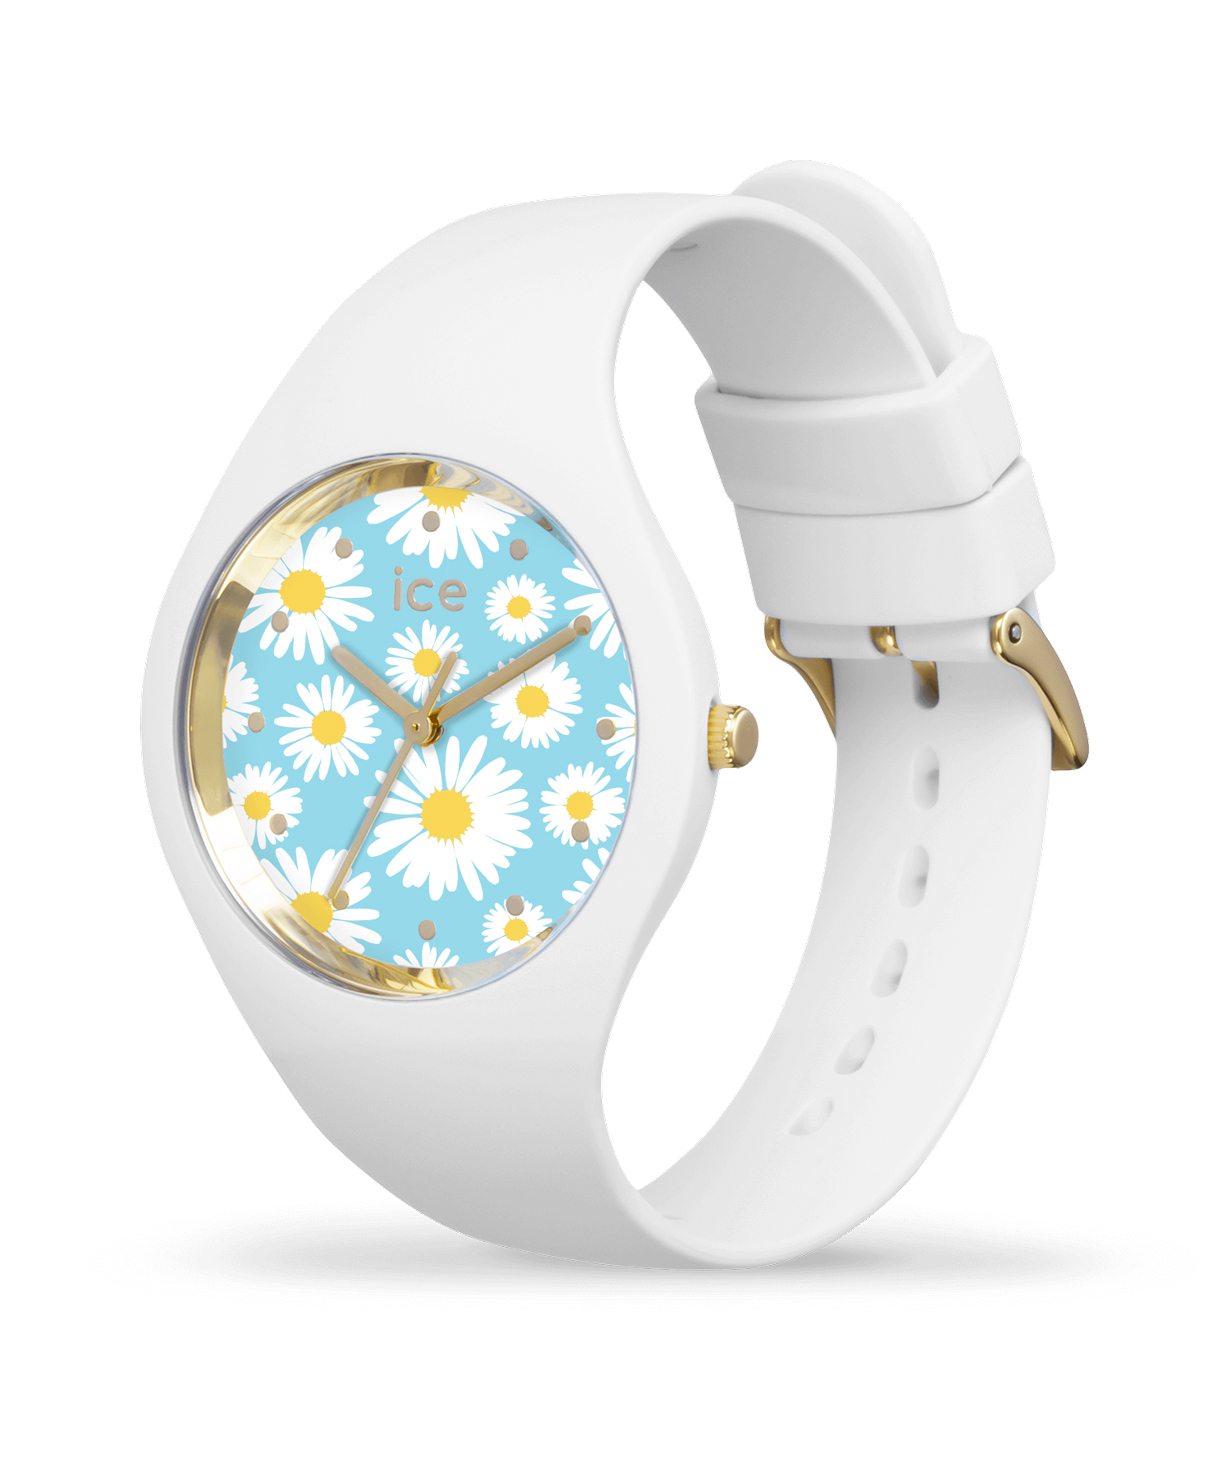 Watch `Ice-Watch` ICE flower - White daisy